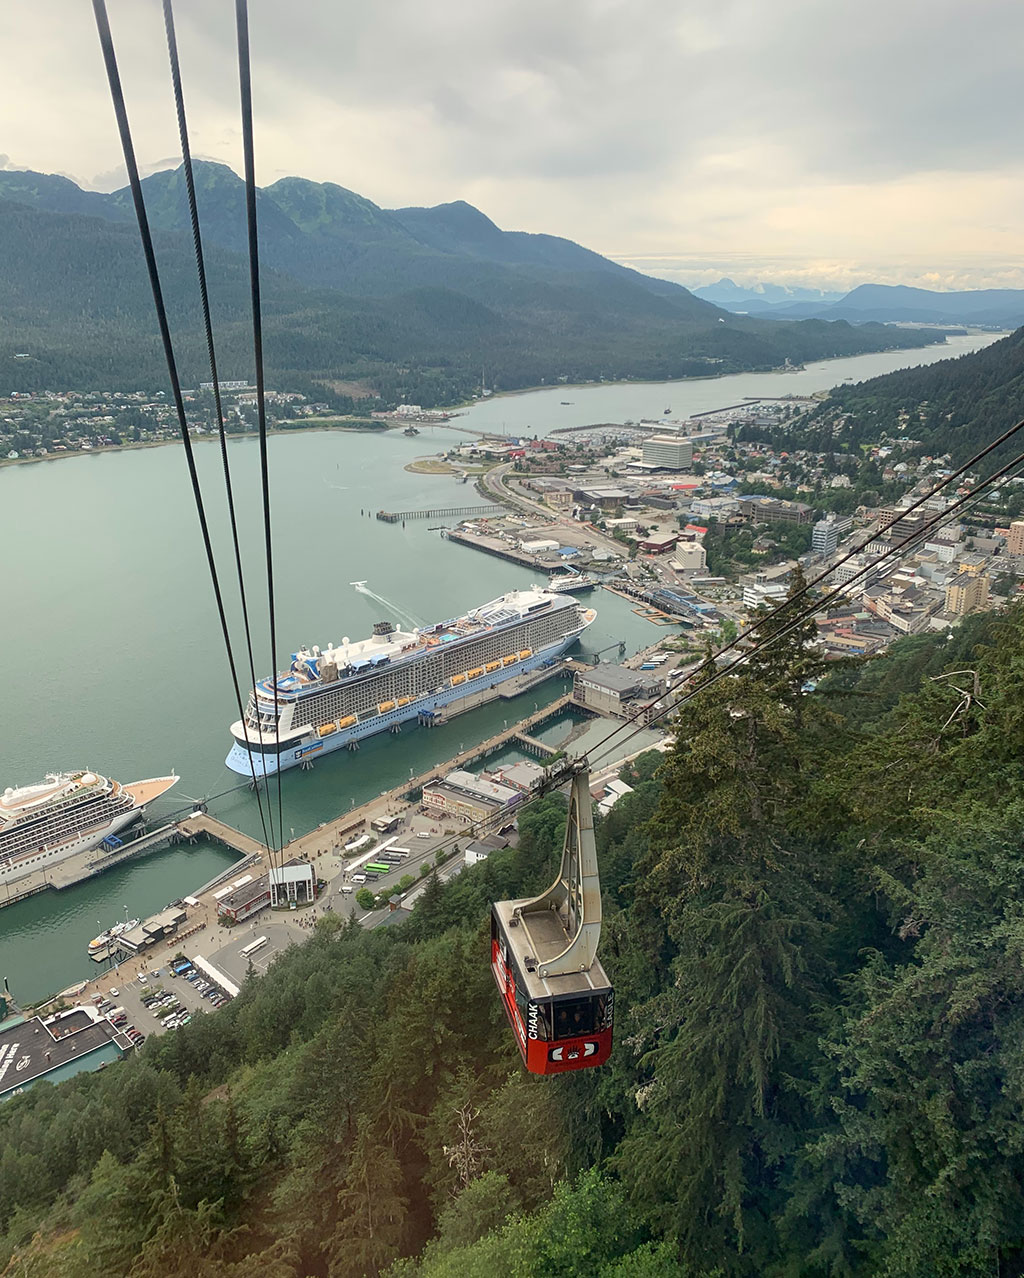 View from tram above Juneau, capital of Alaska